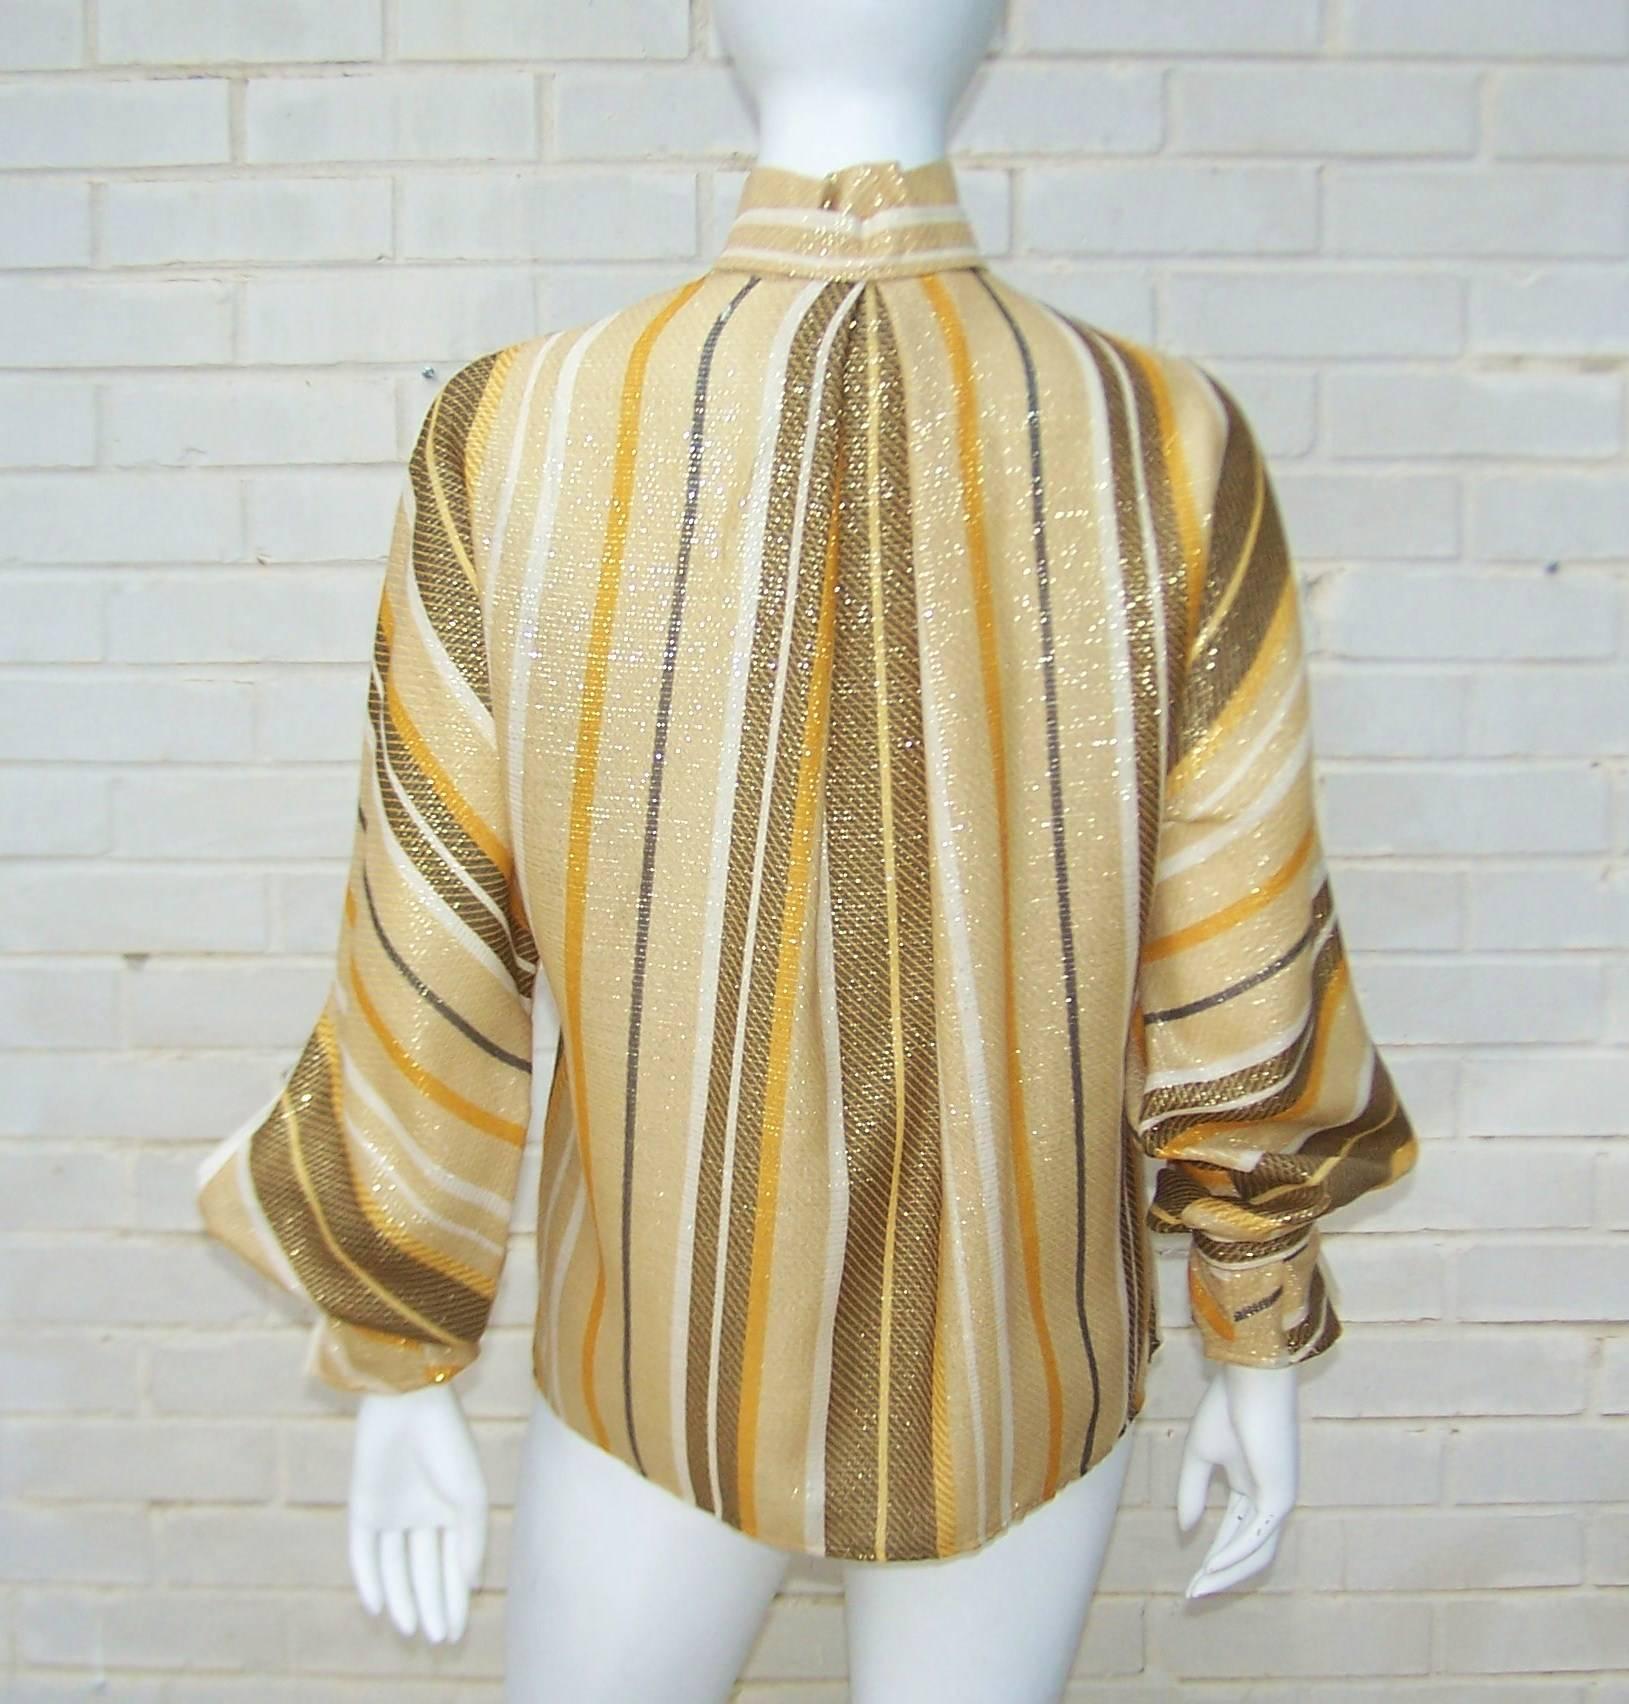 Women's 1980's Gianfranco Ferre Striped Gold Lurex Dandy Style Blouse